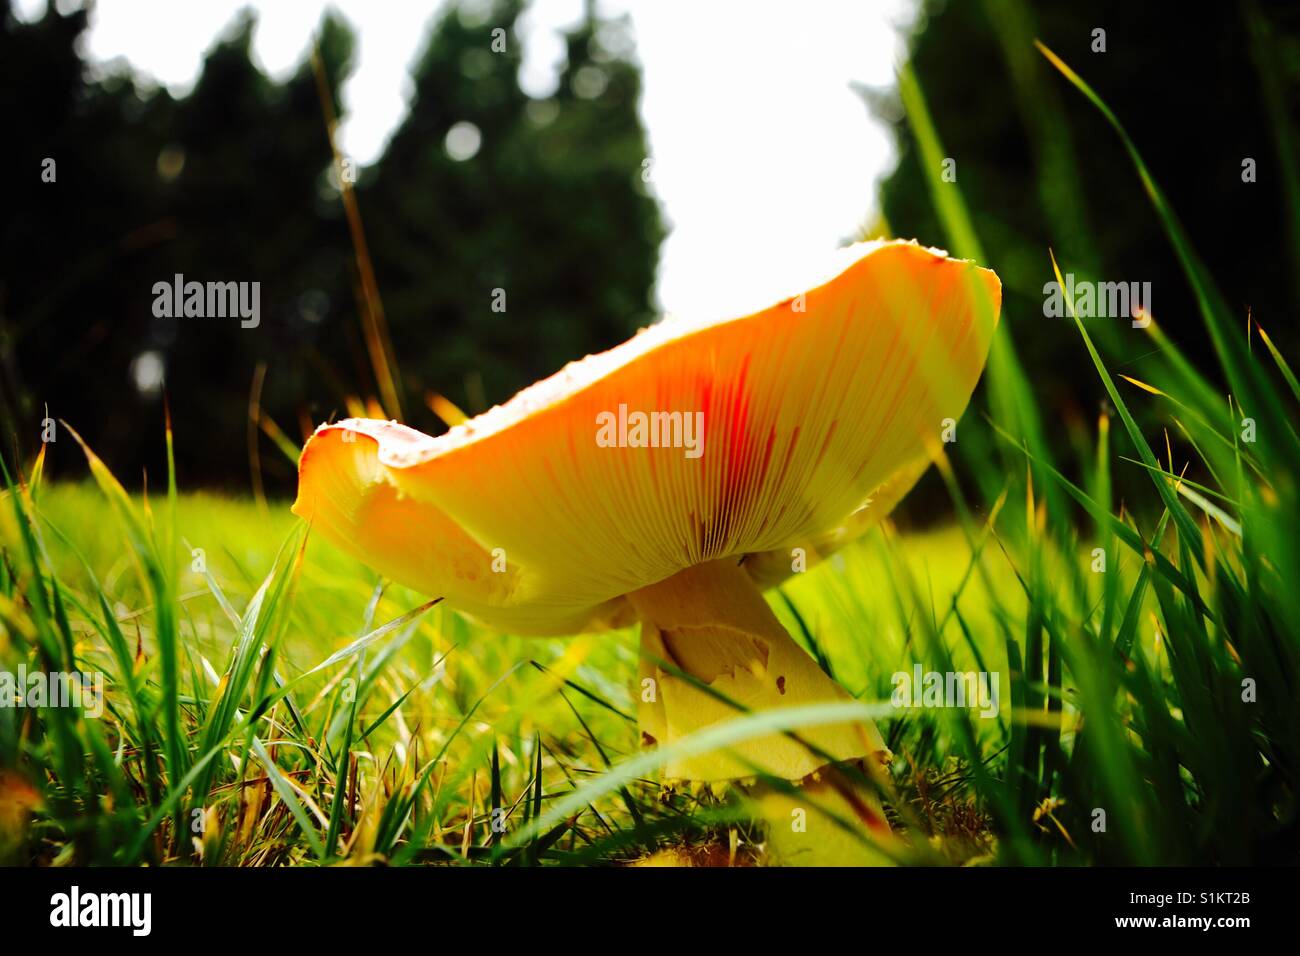 Beautiful fantasy mushroom in grass Stock Photo